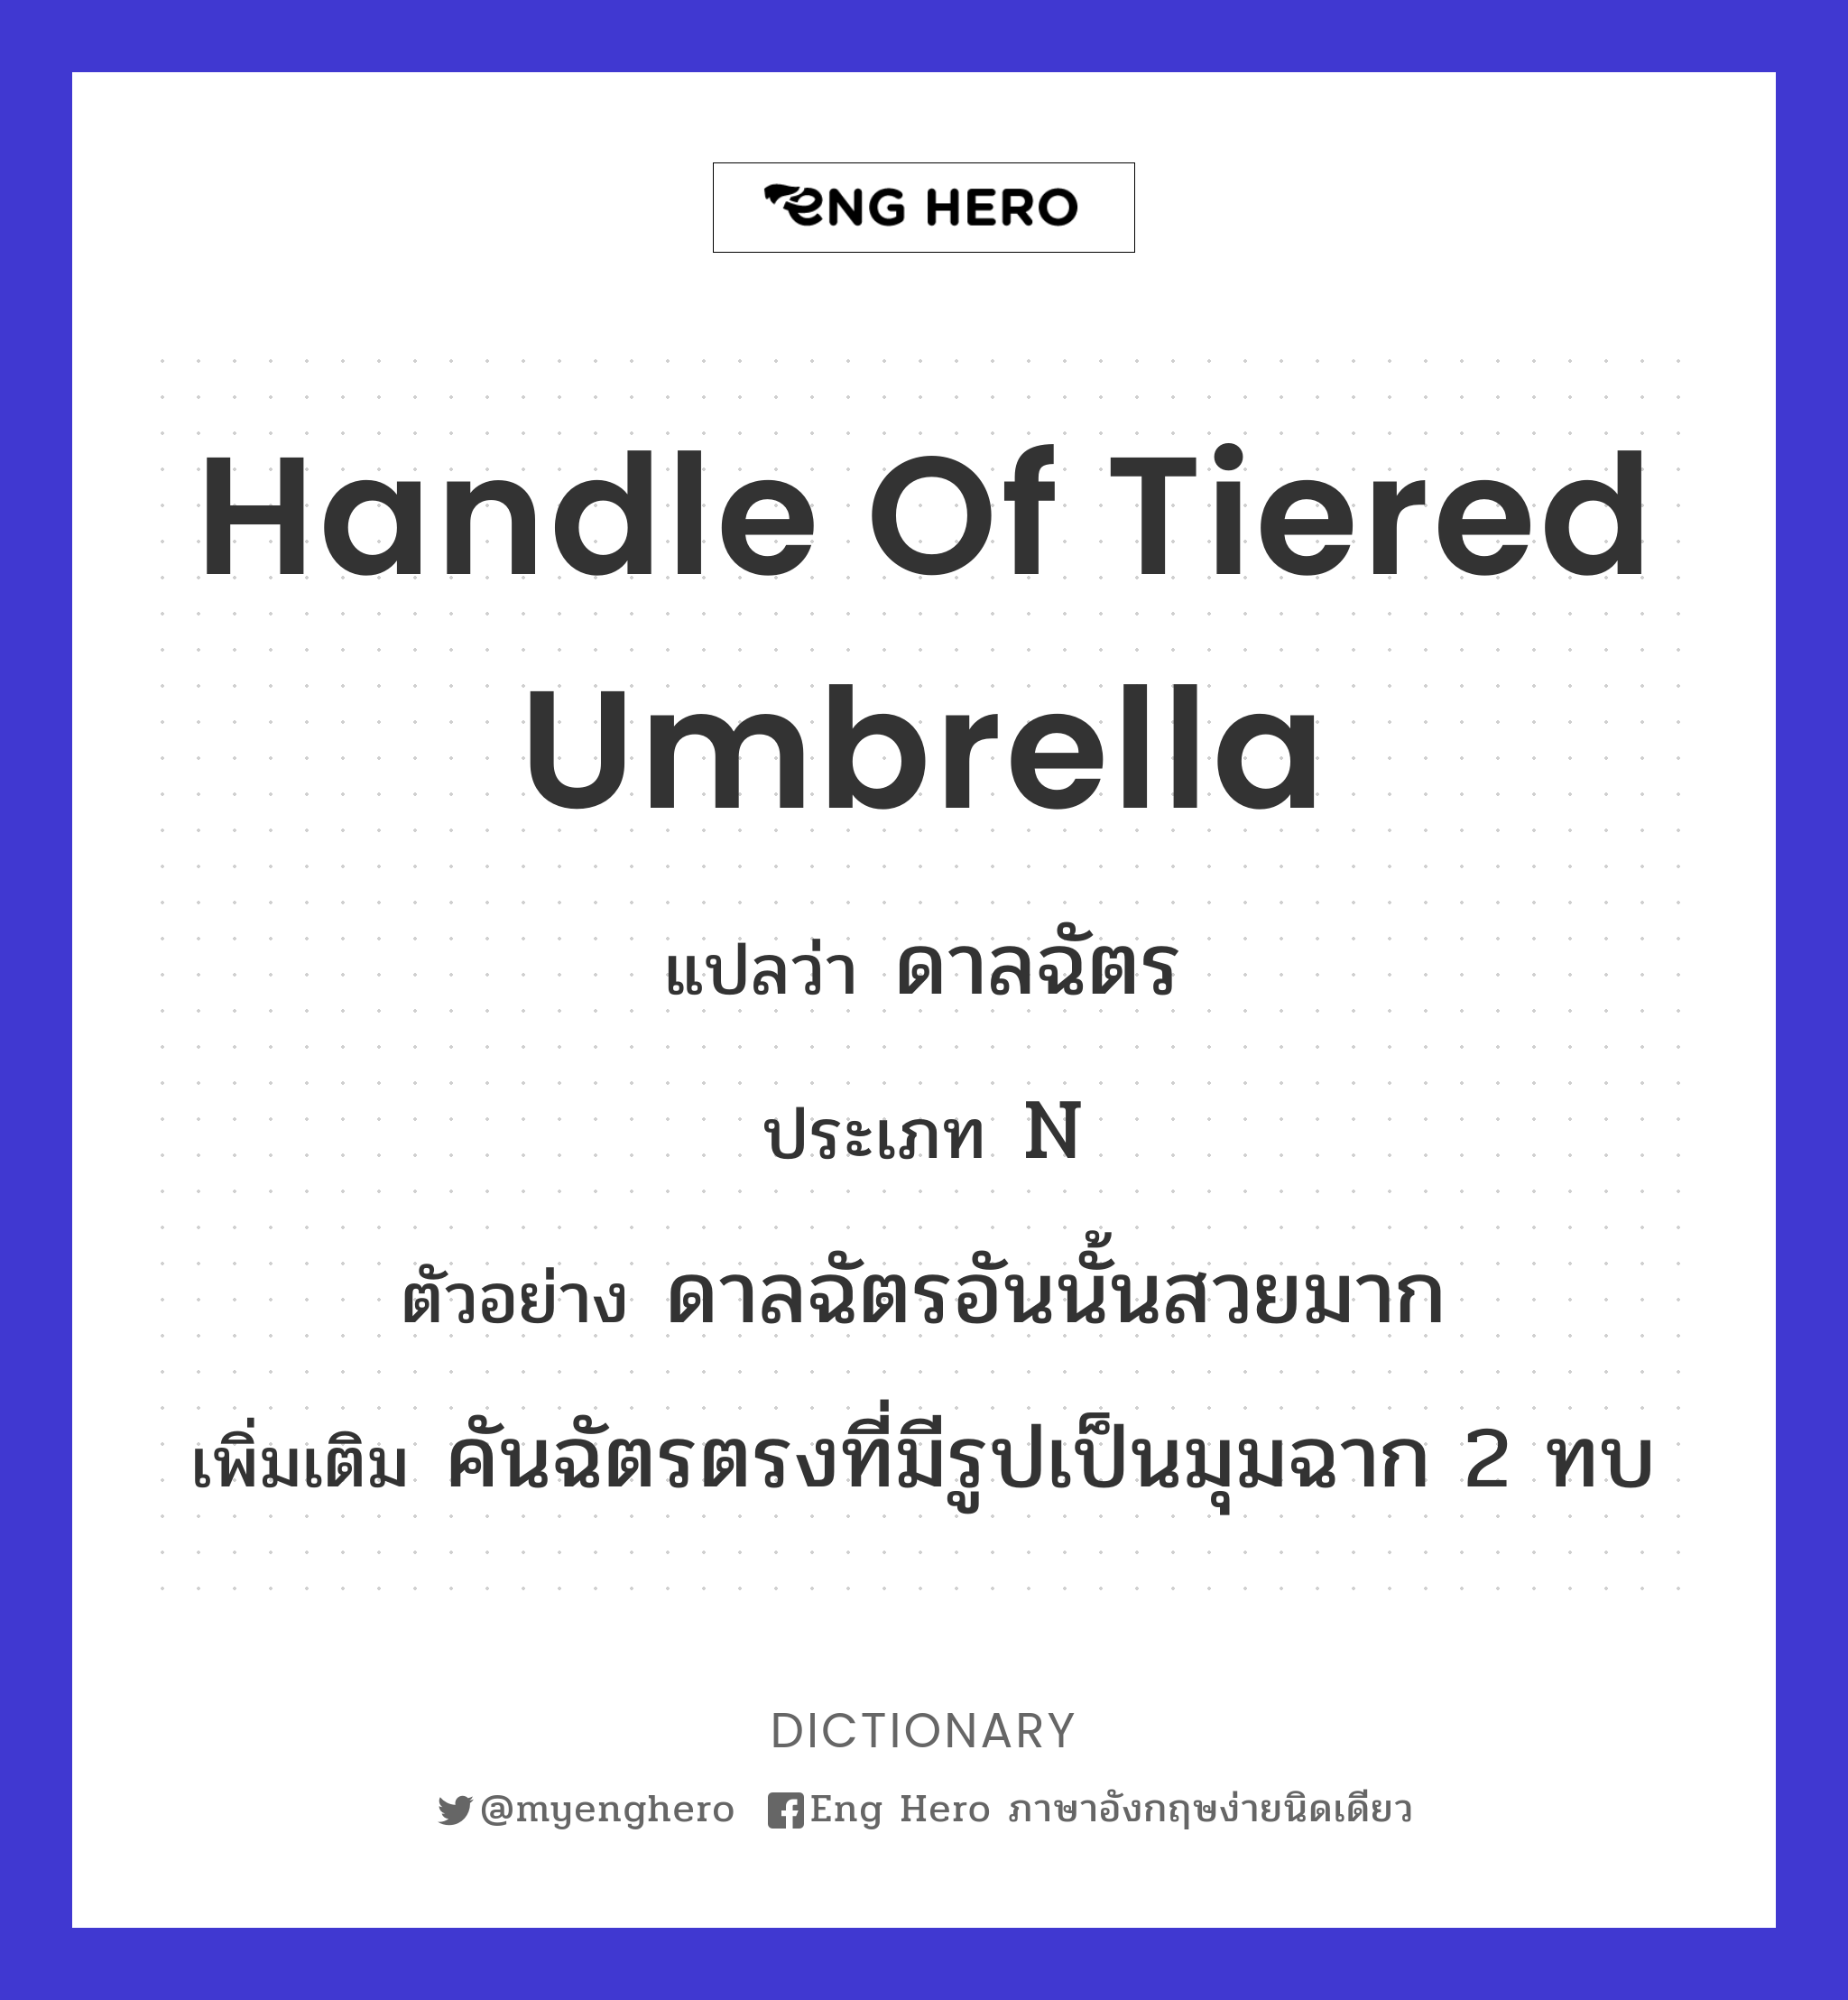 handle of tiered umbrella